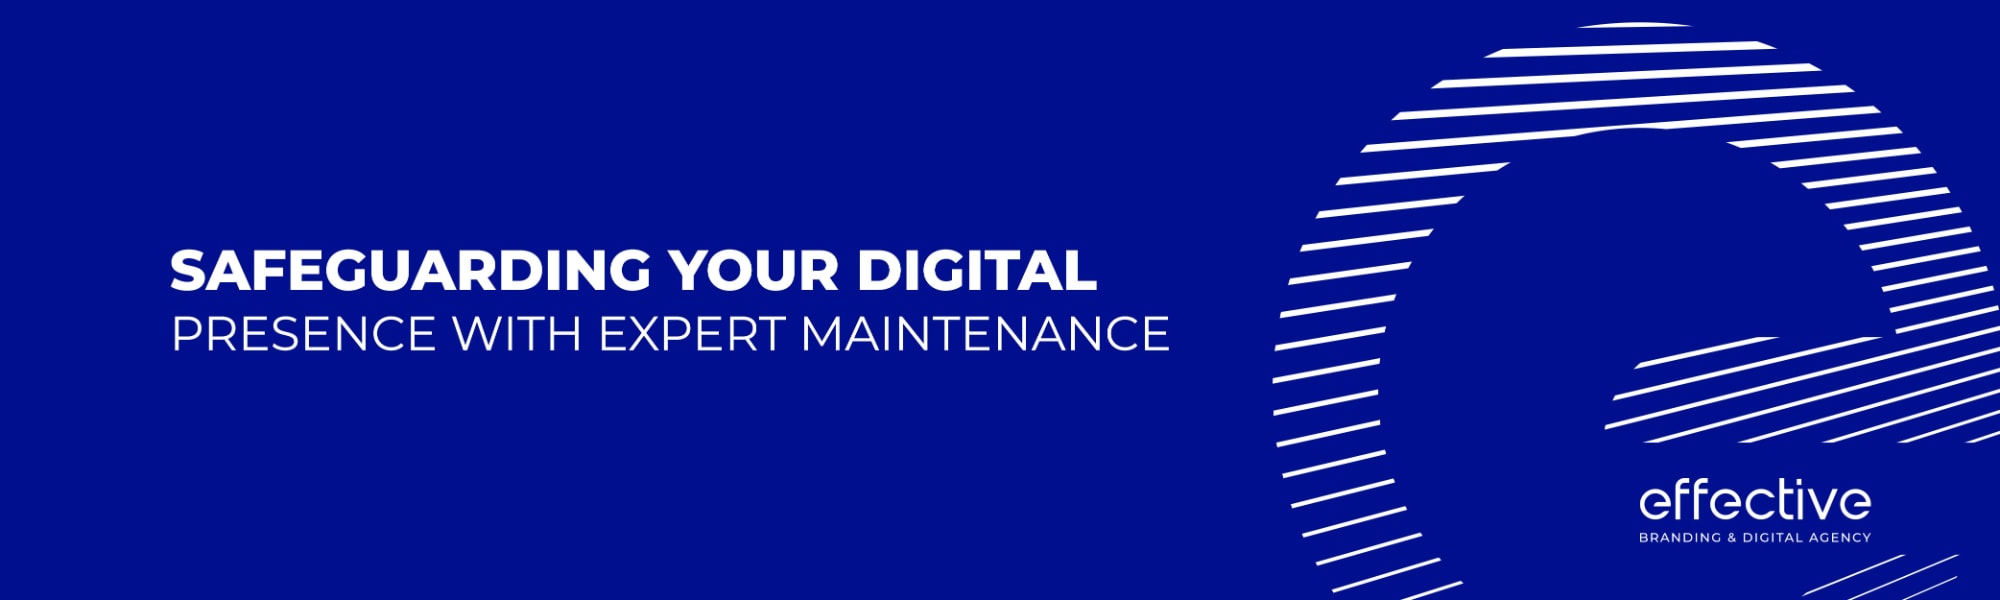 Safeguarding Your Digital Presence with Expert Maintenance